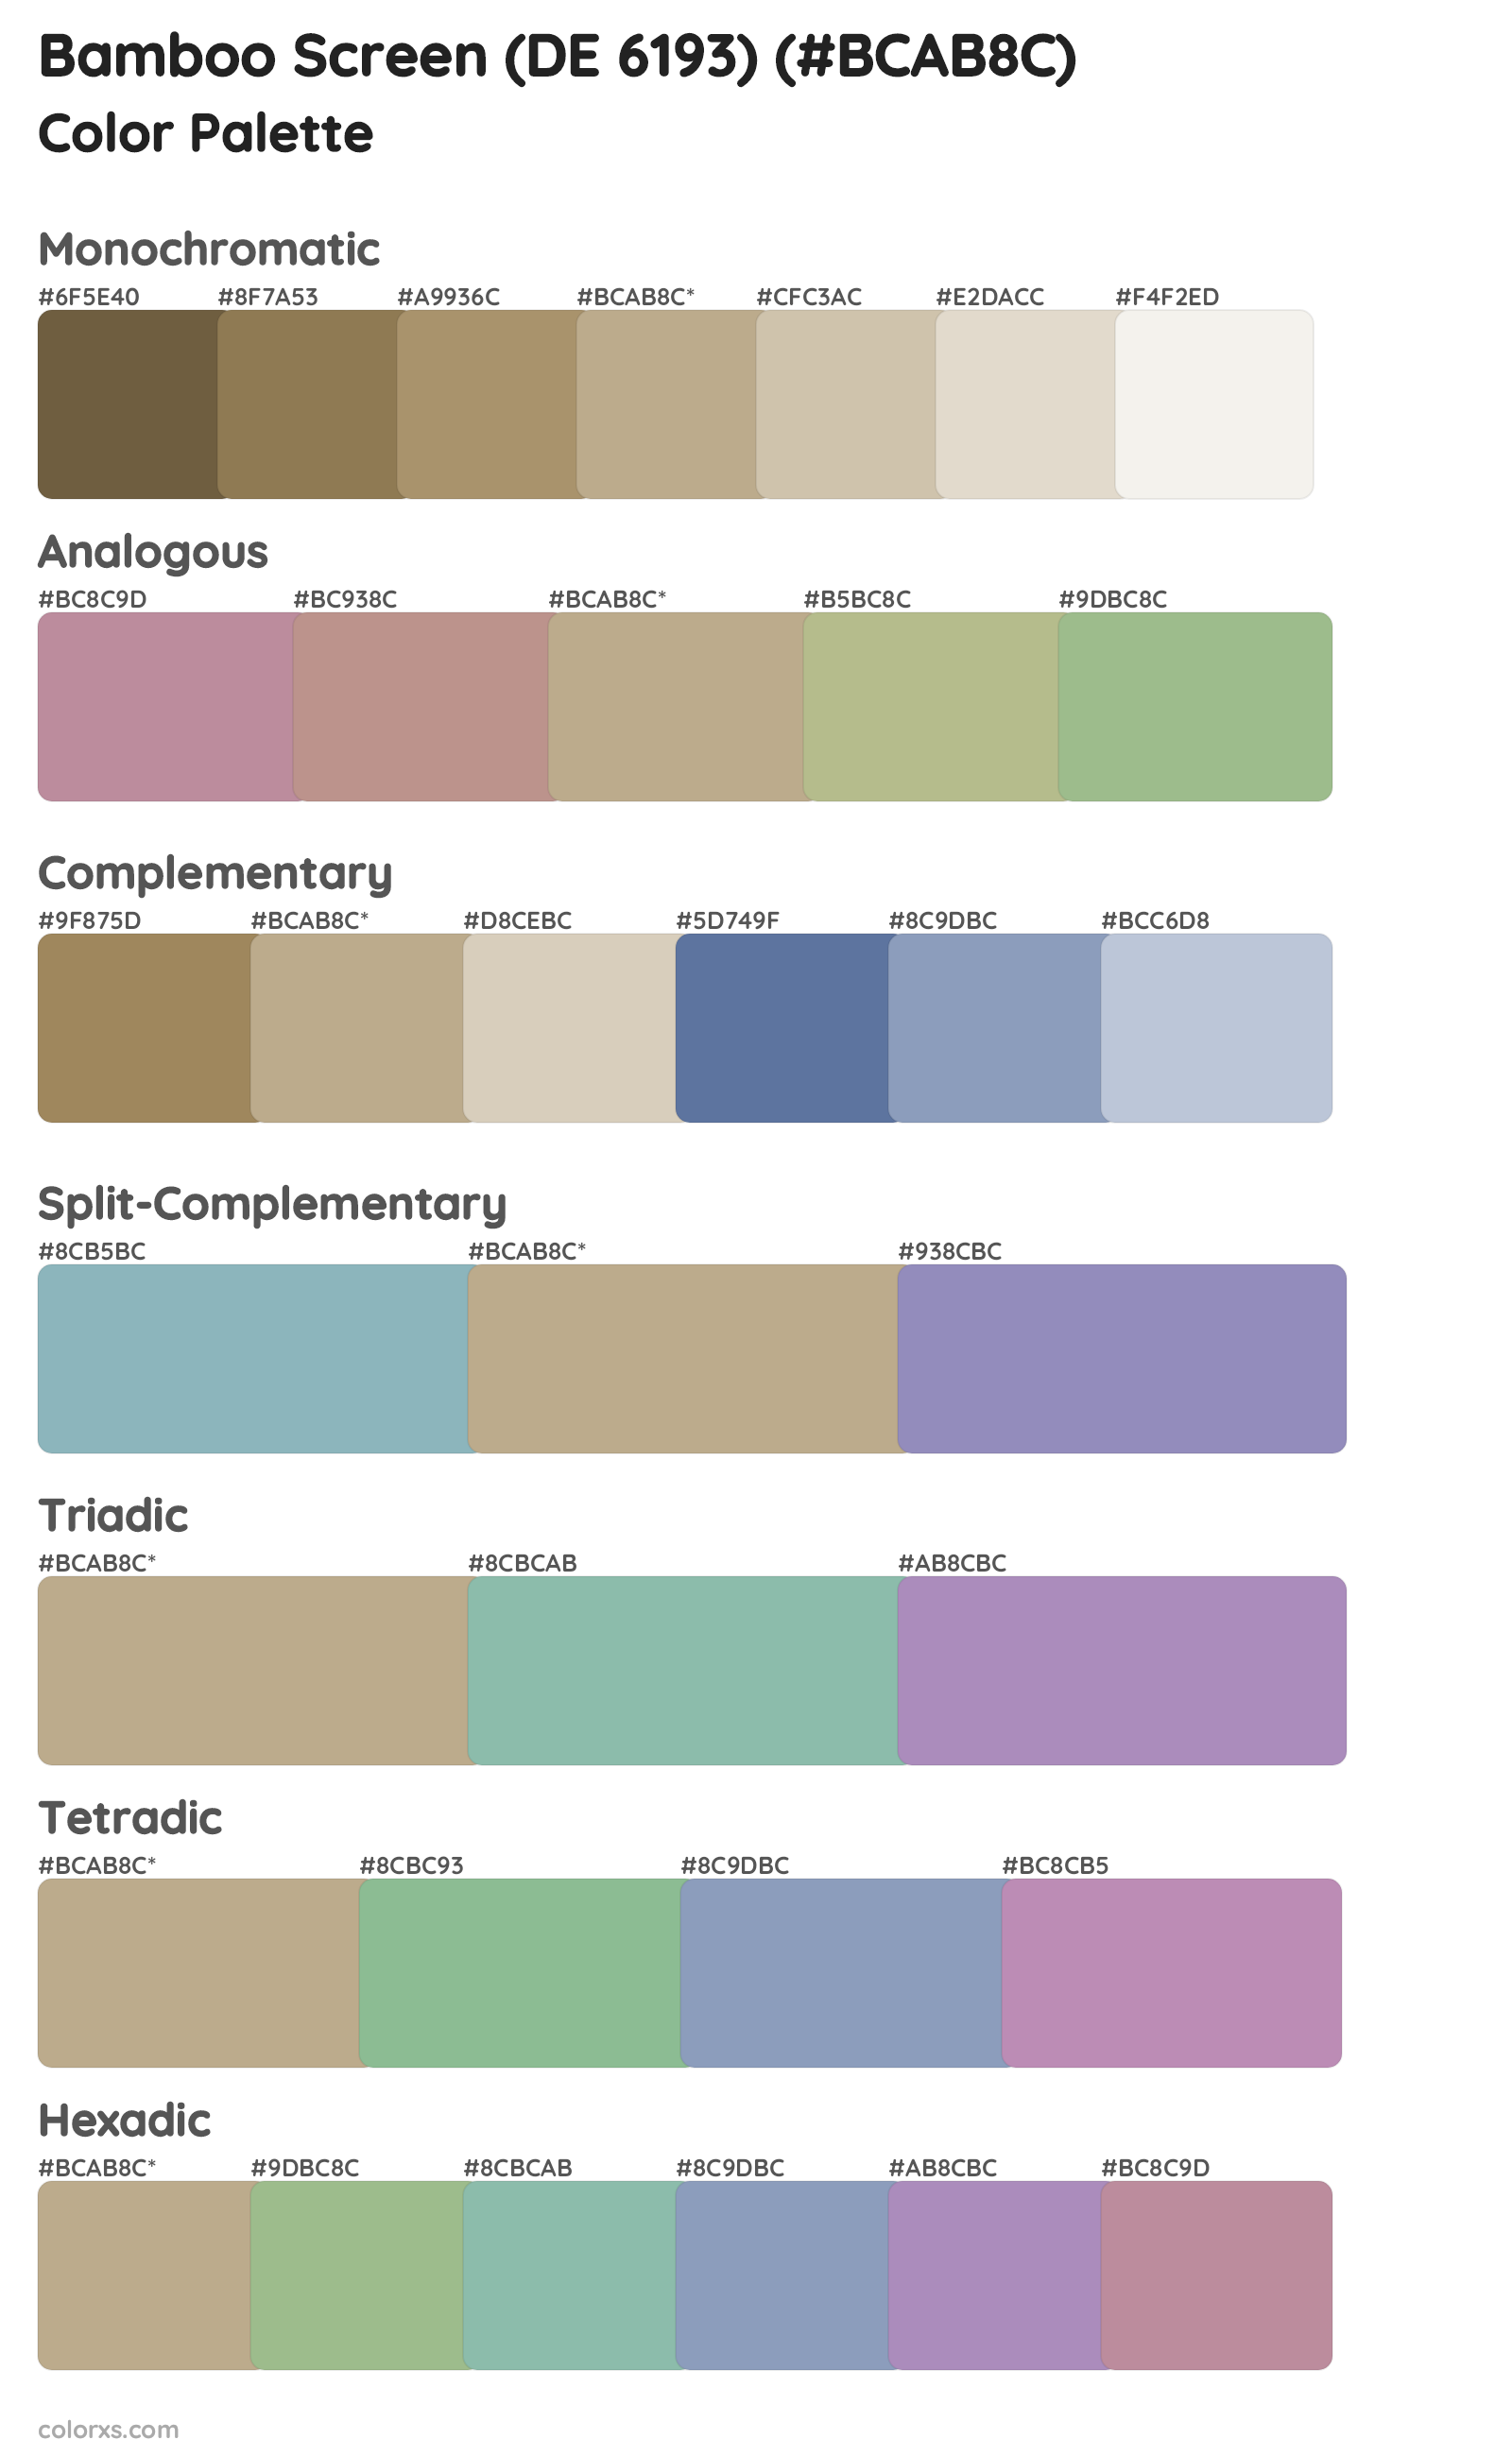 Bamboo Screen (DE 6193) Color Scheme Palettes